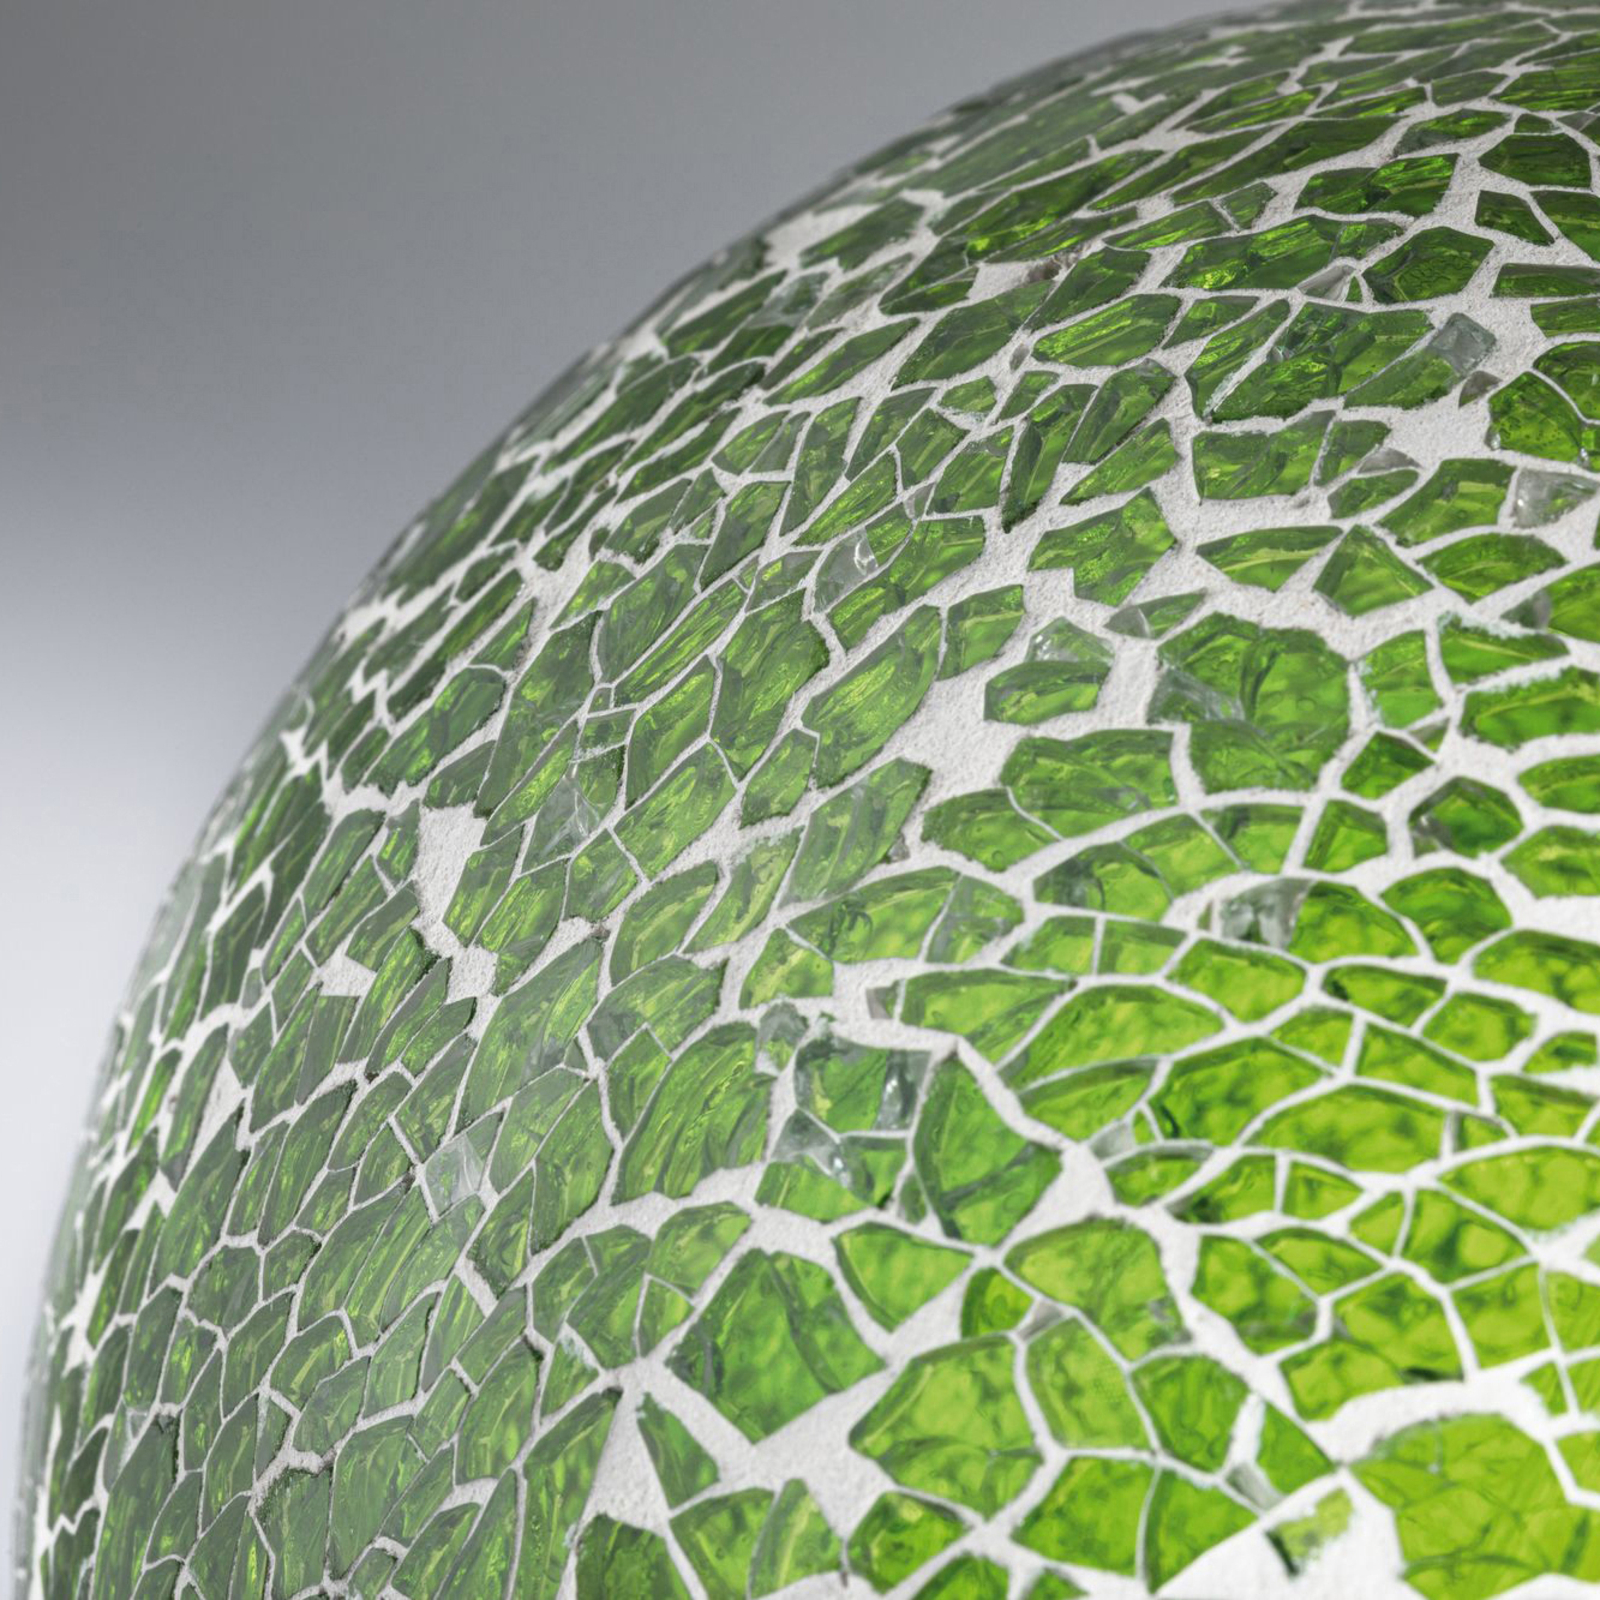 Paulmann E27 LED-kugle 5W Miracle Mosaic grøn